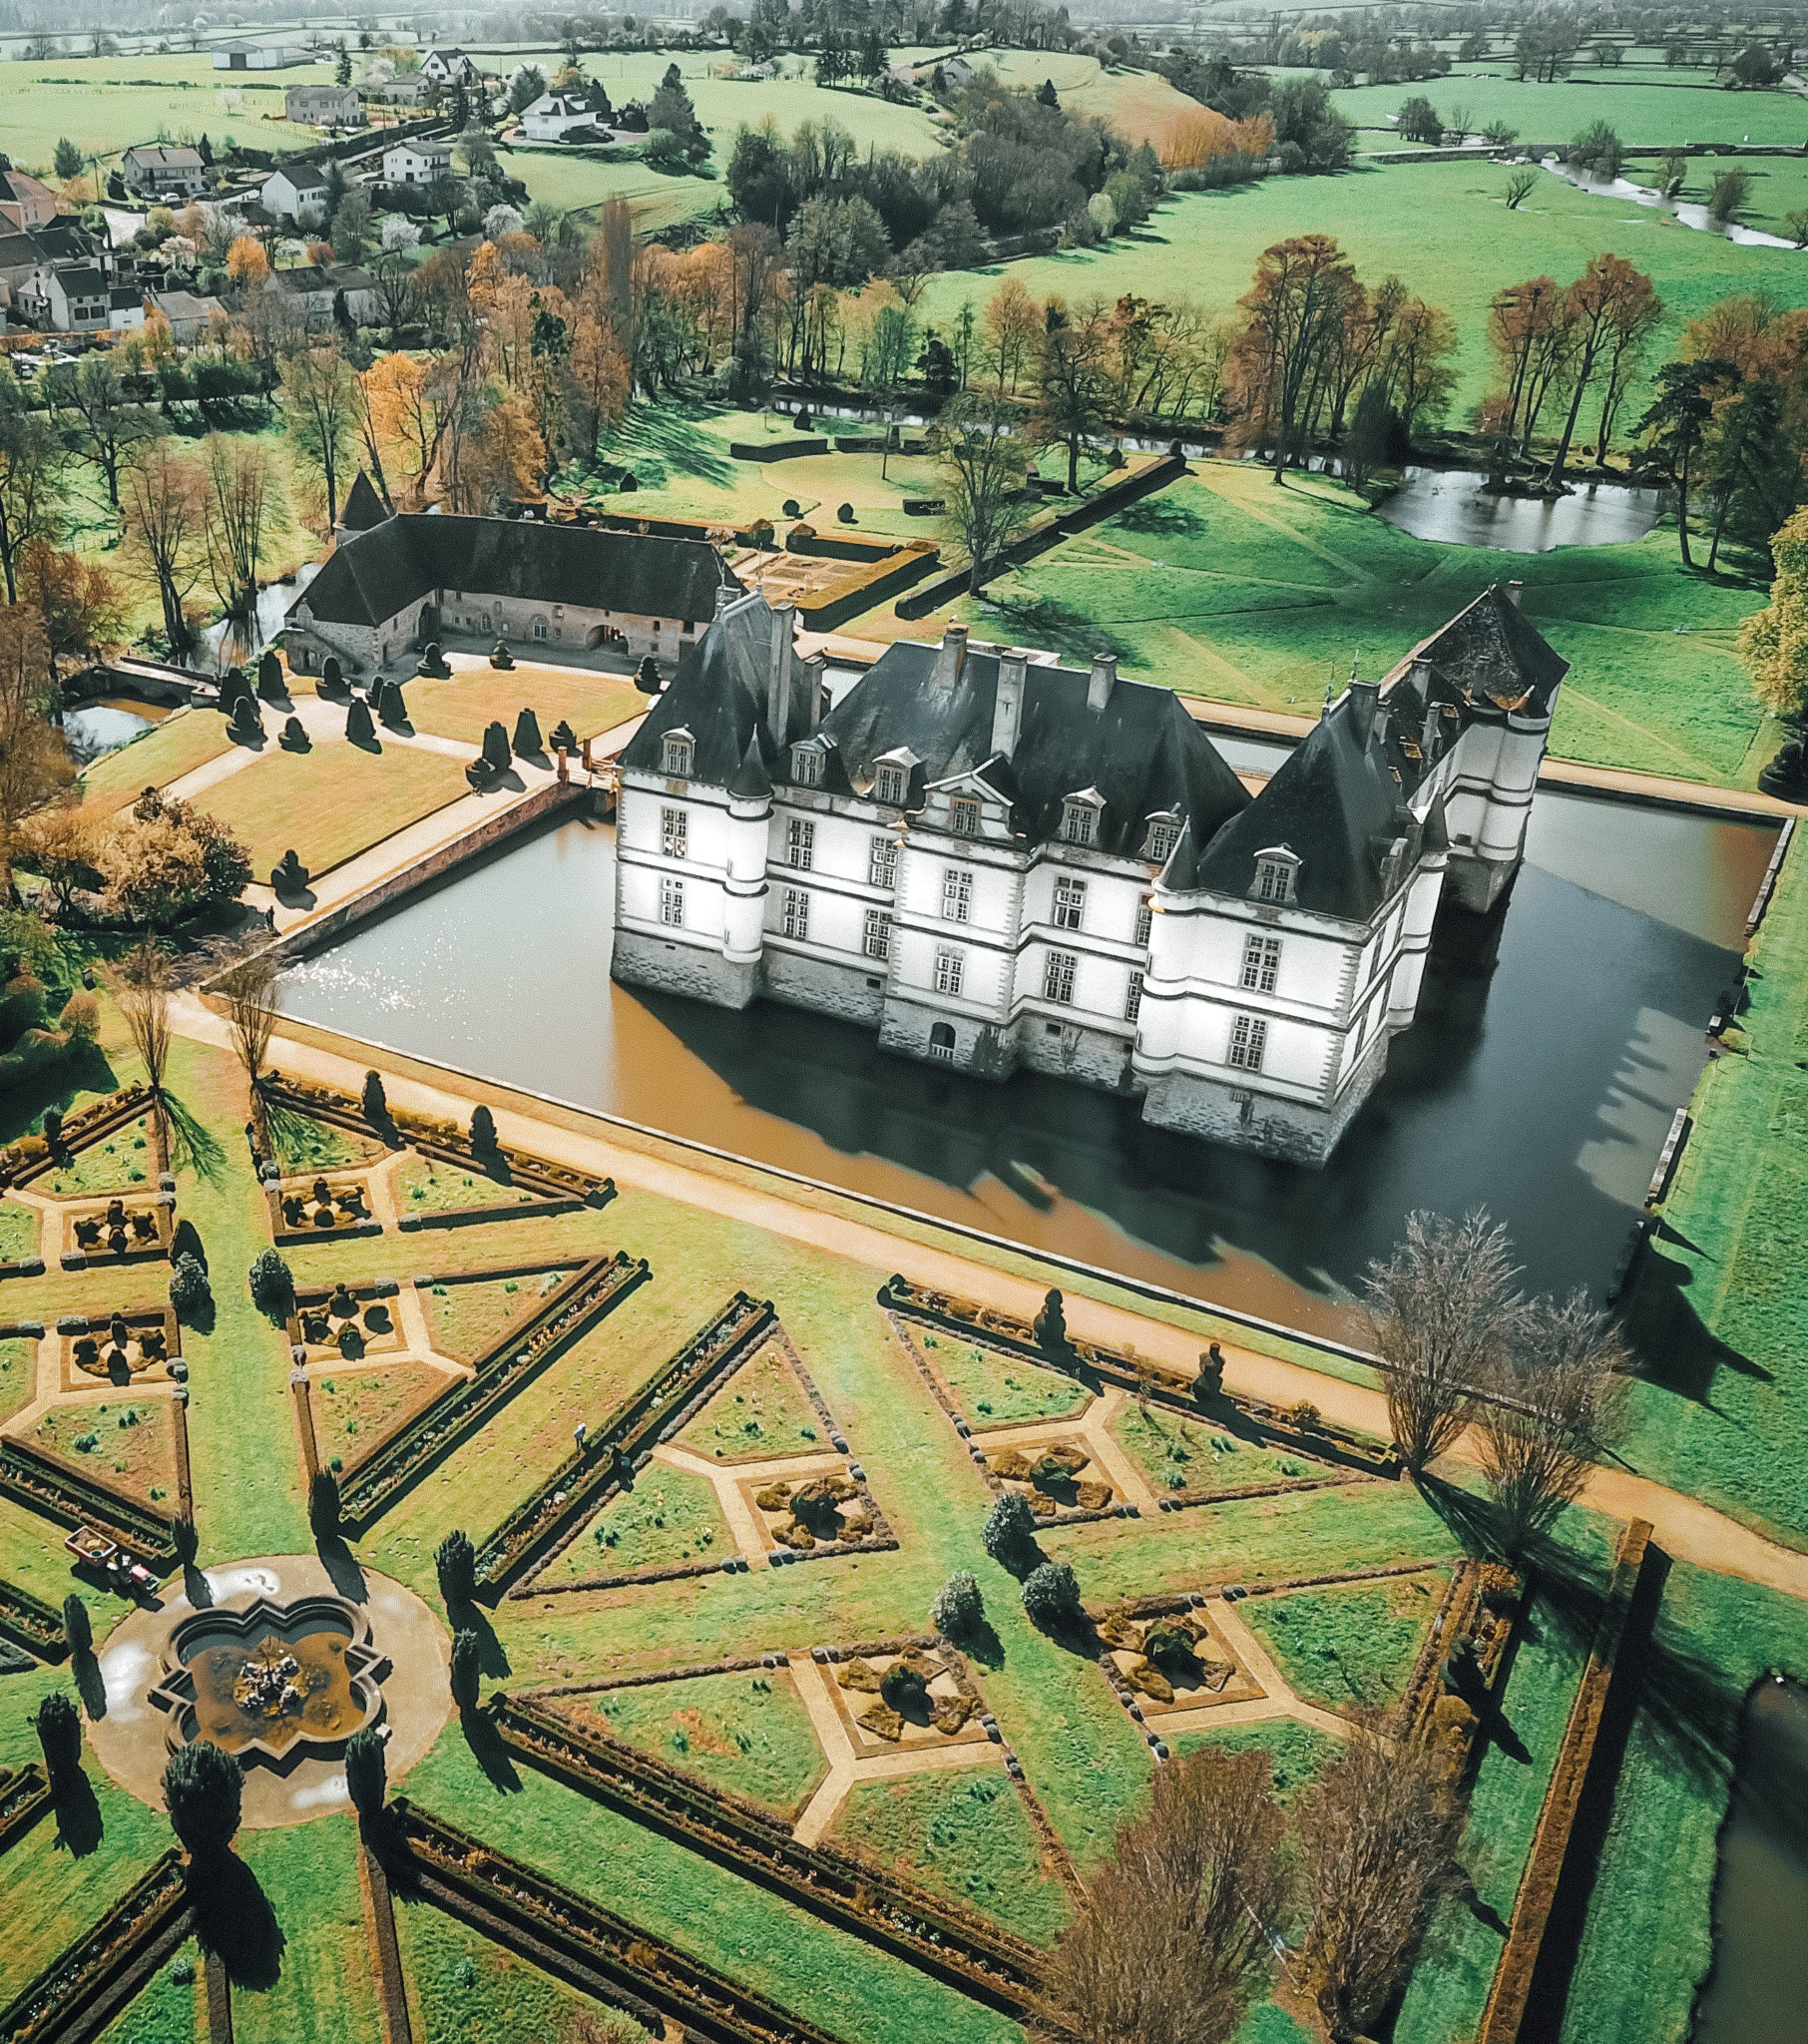 Visiting Cormatin Chateau | WORLD OF WANDERLUST